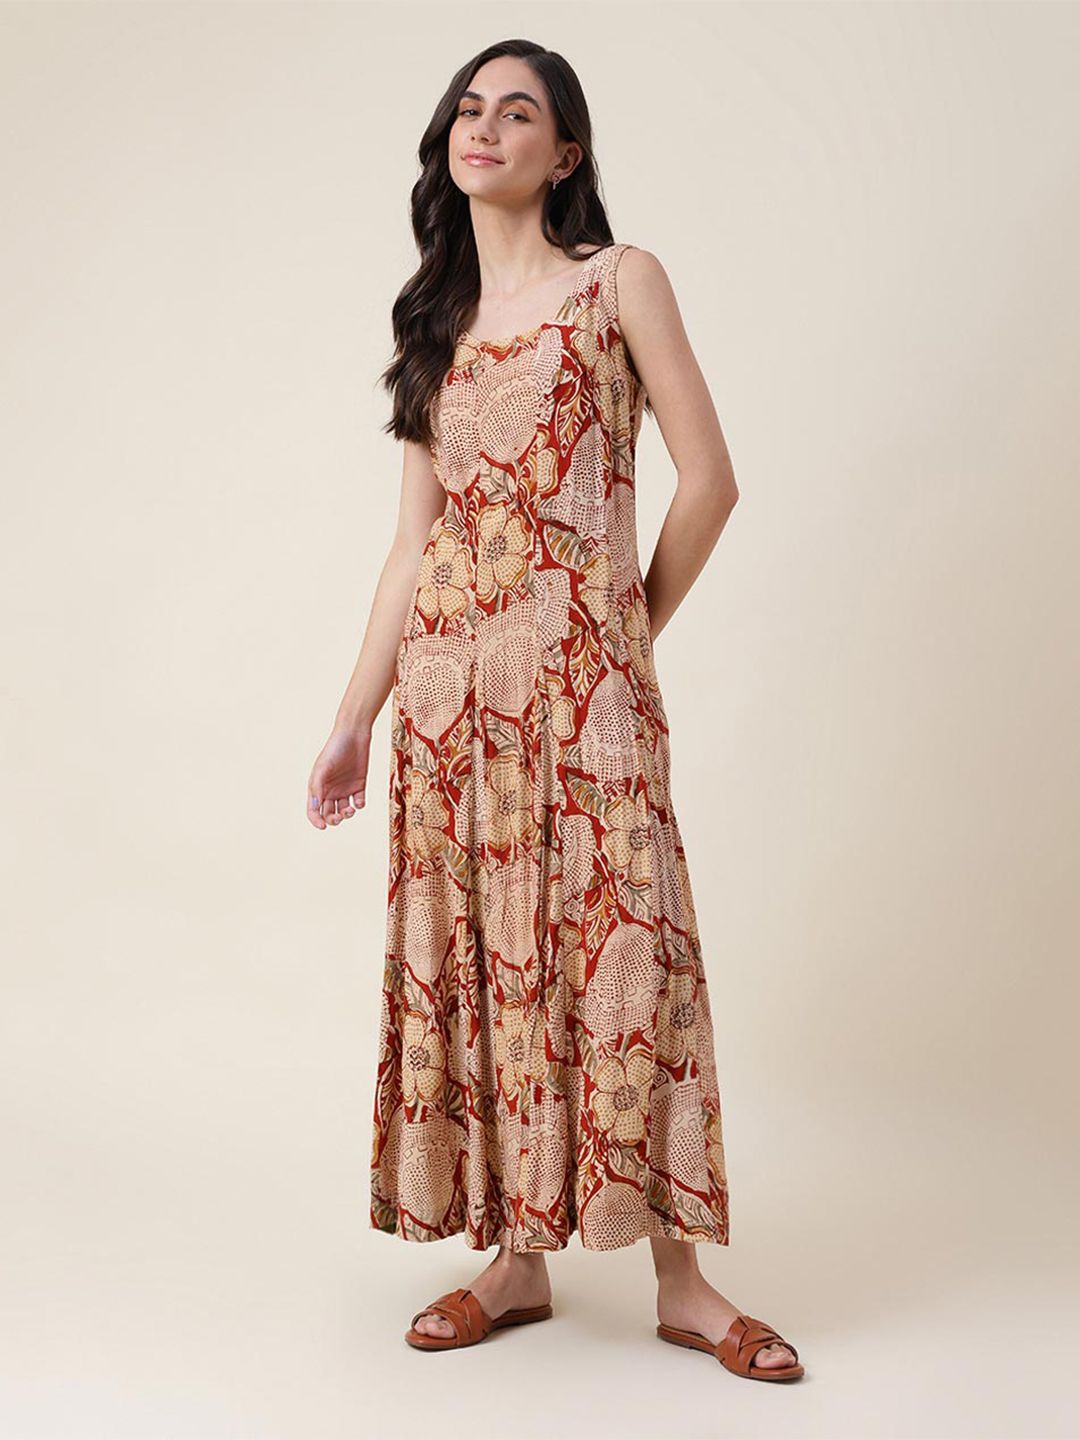 Fabindia Beige Floral Ethnic Maxi Dress Price in India